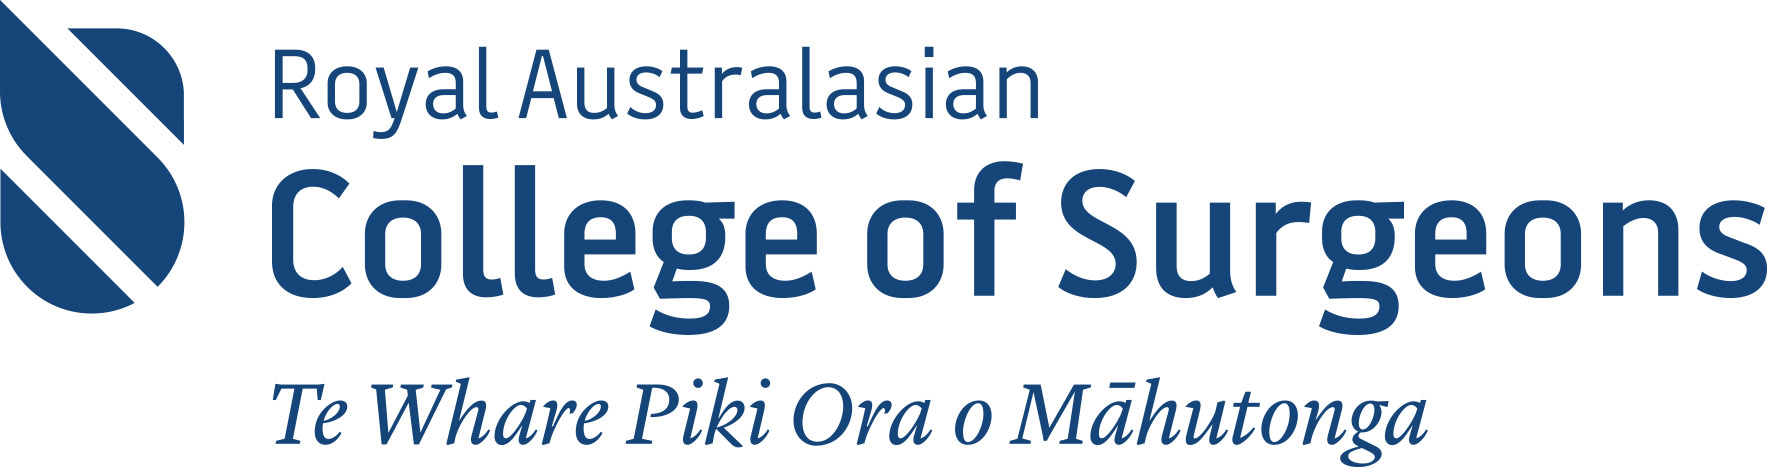 Royal Australasian College of Surgeons (RACS)